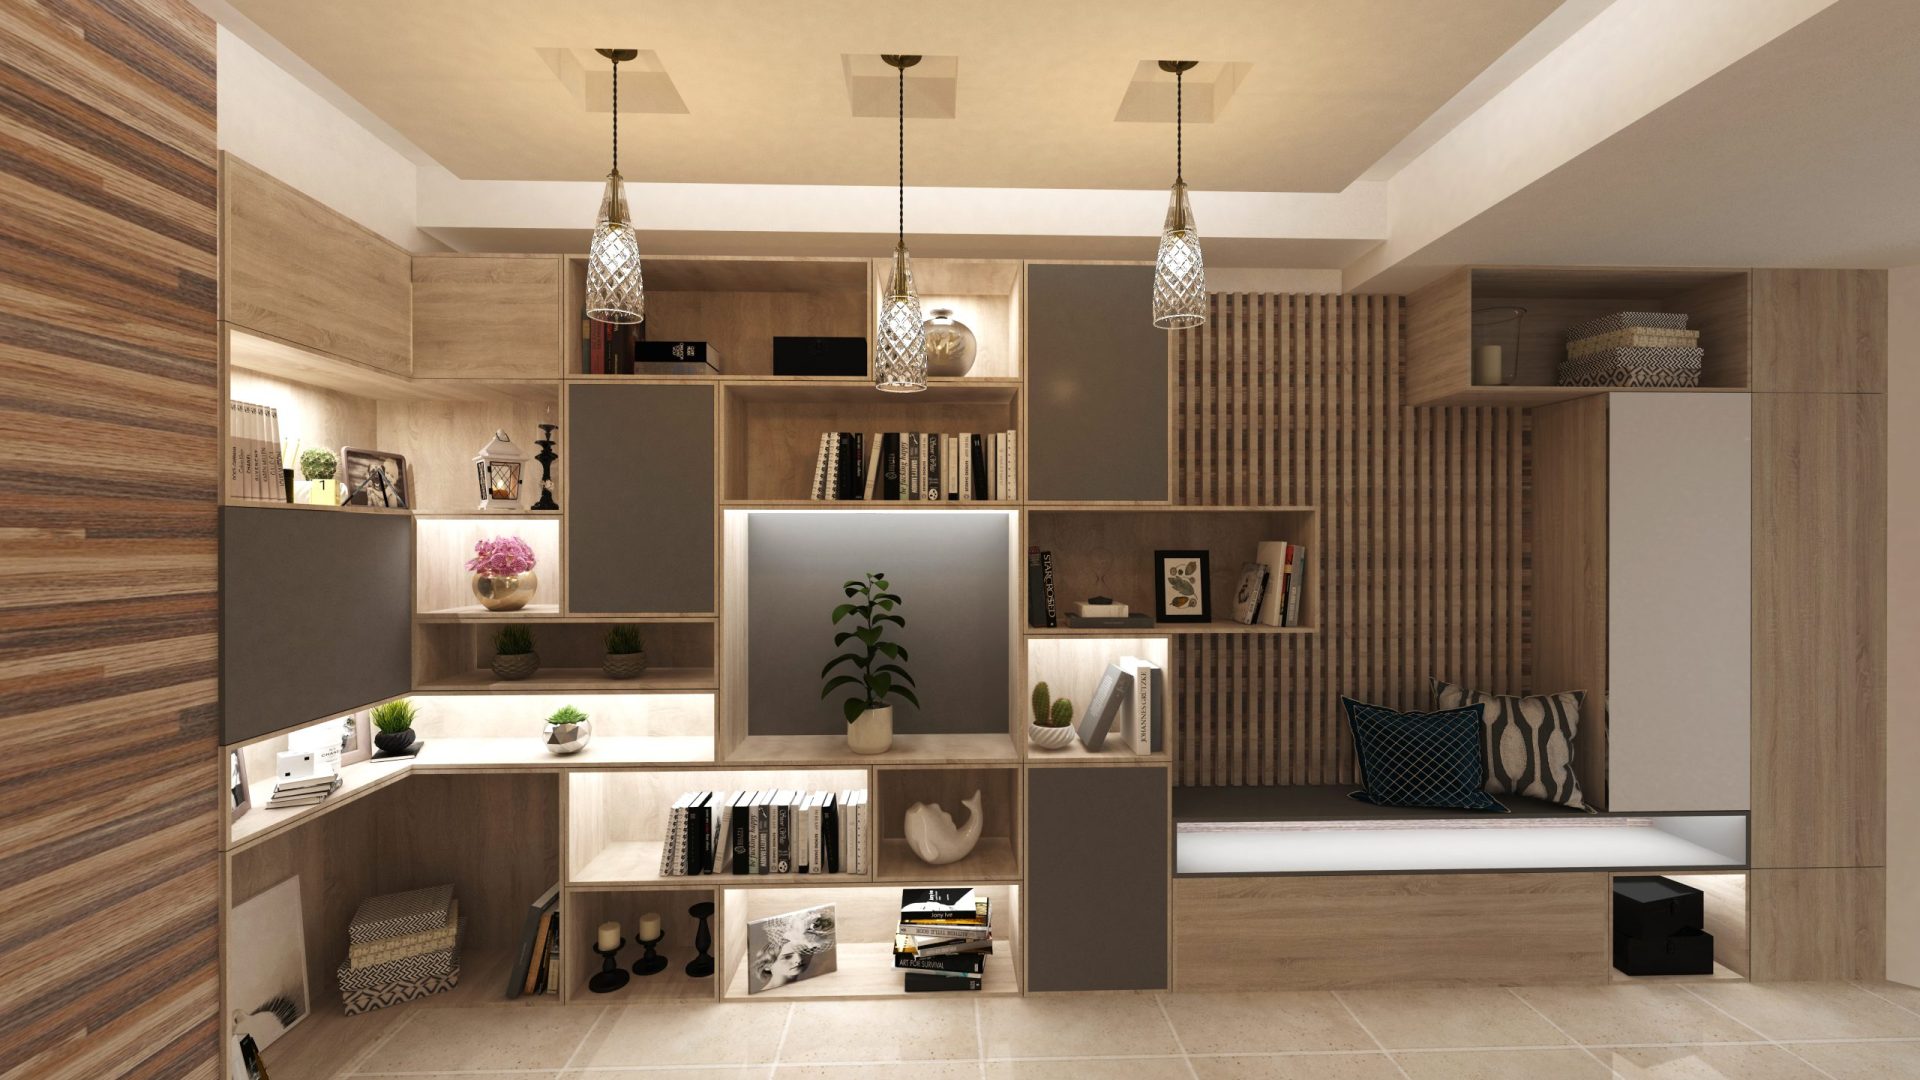 Sahar designed Living Room